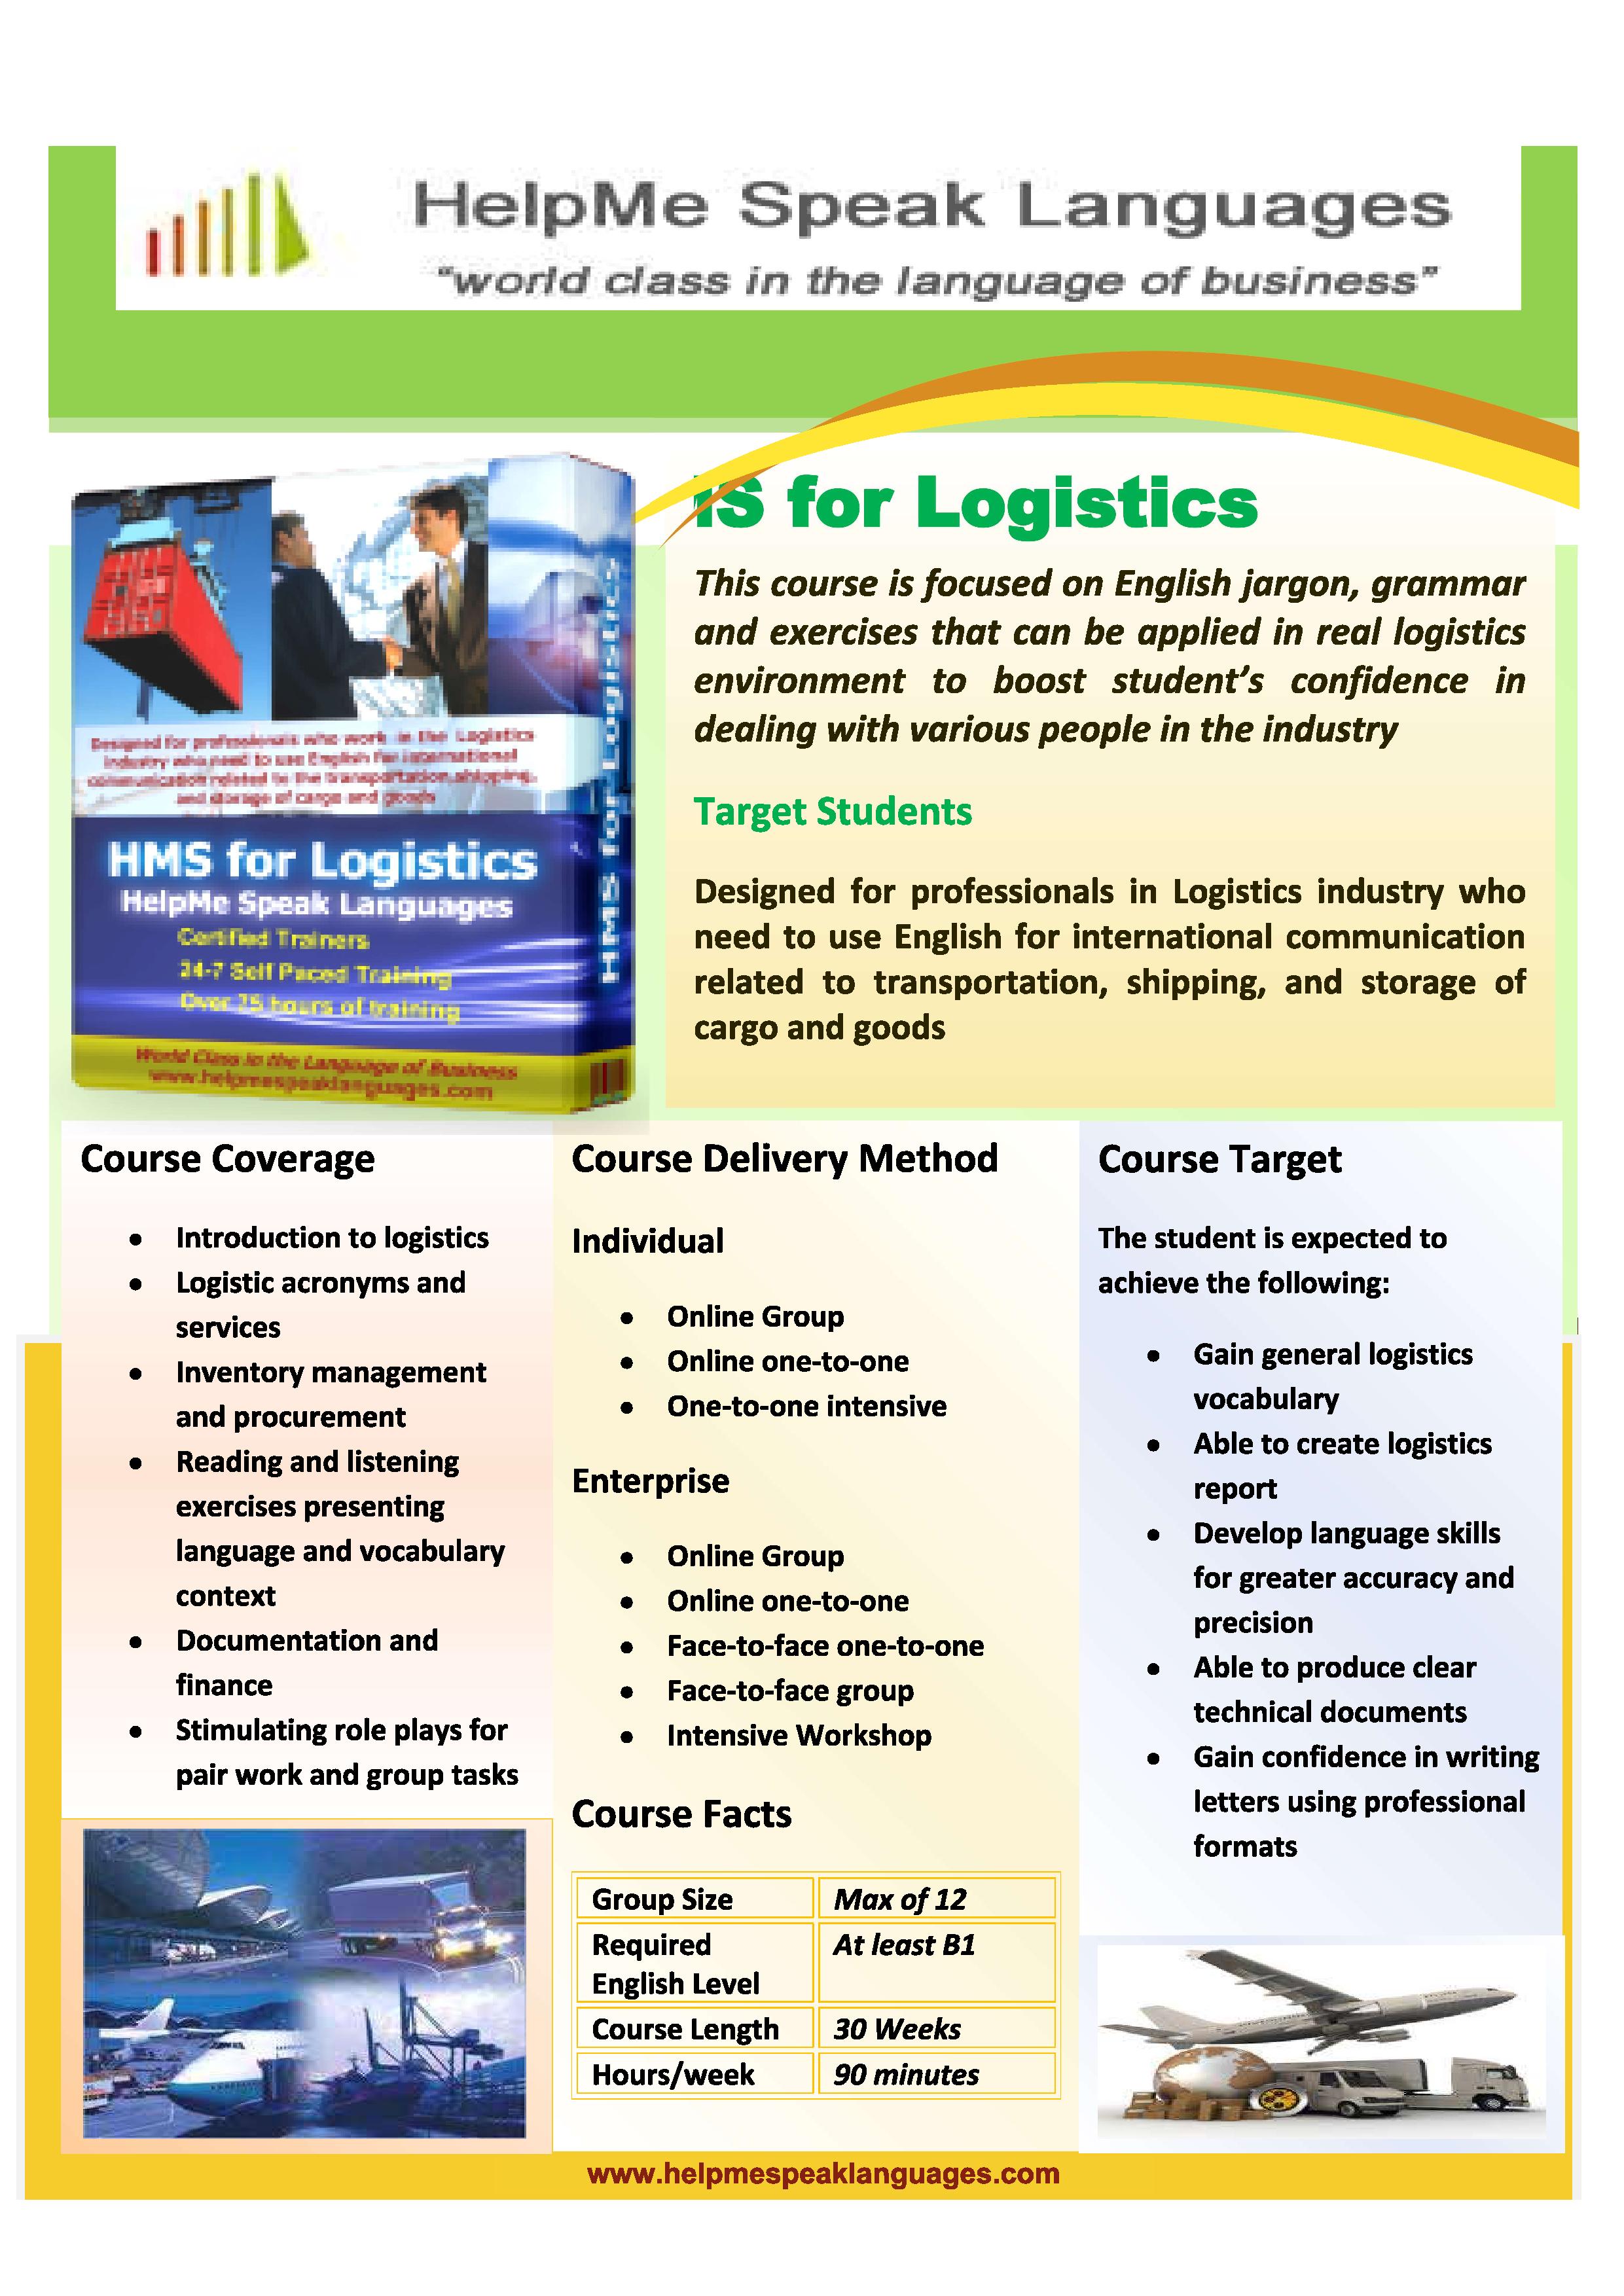 hms-for-logistics-page-001